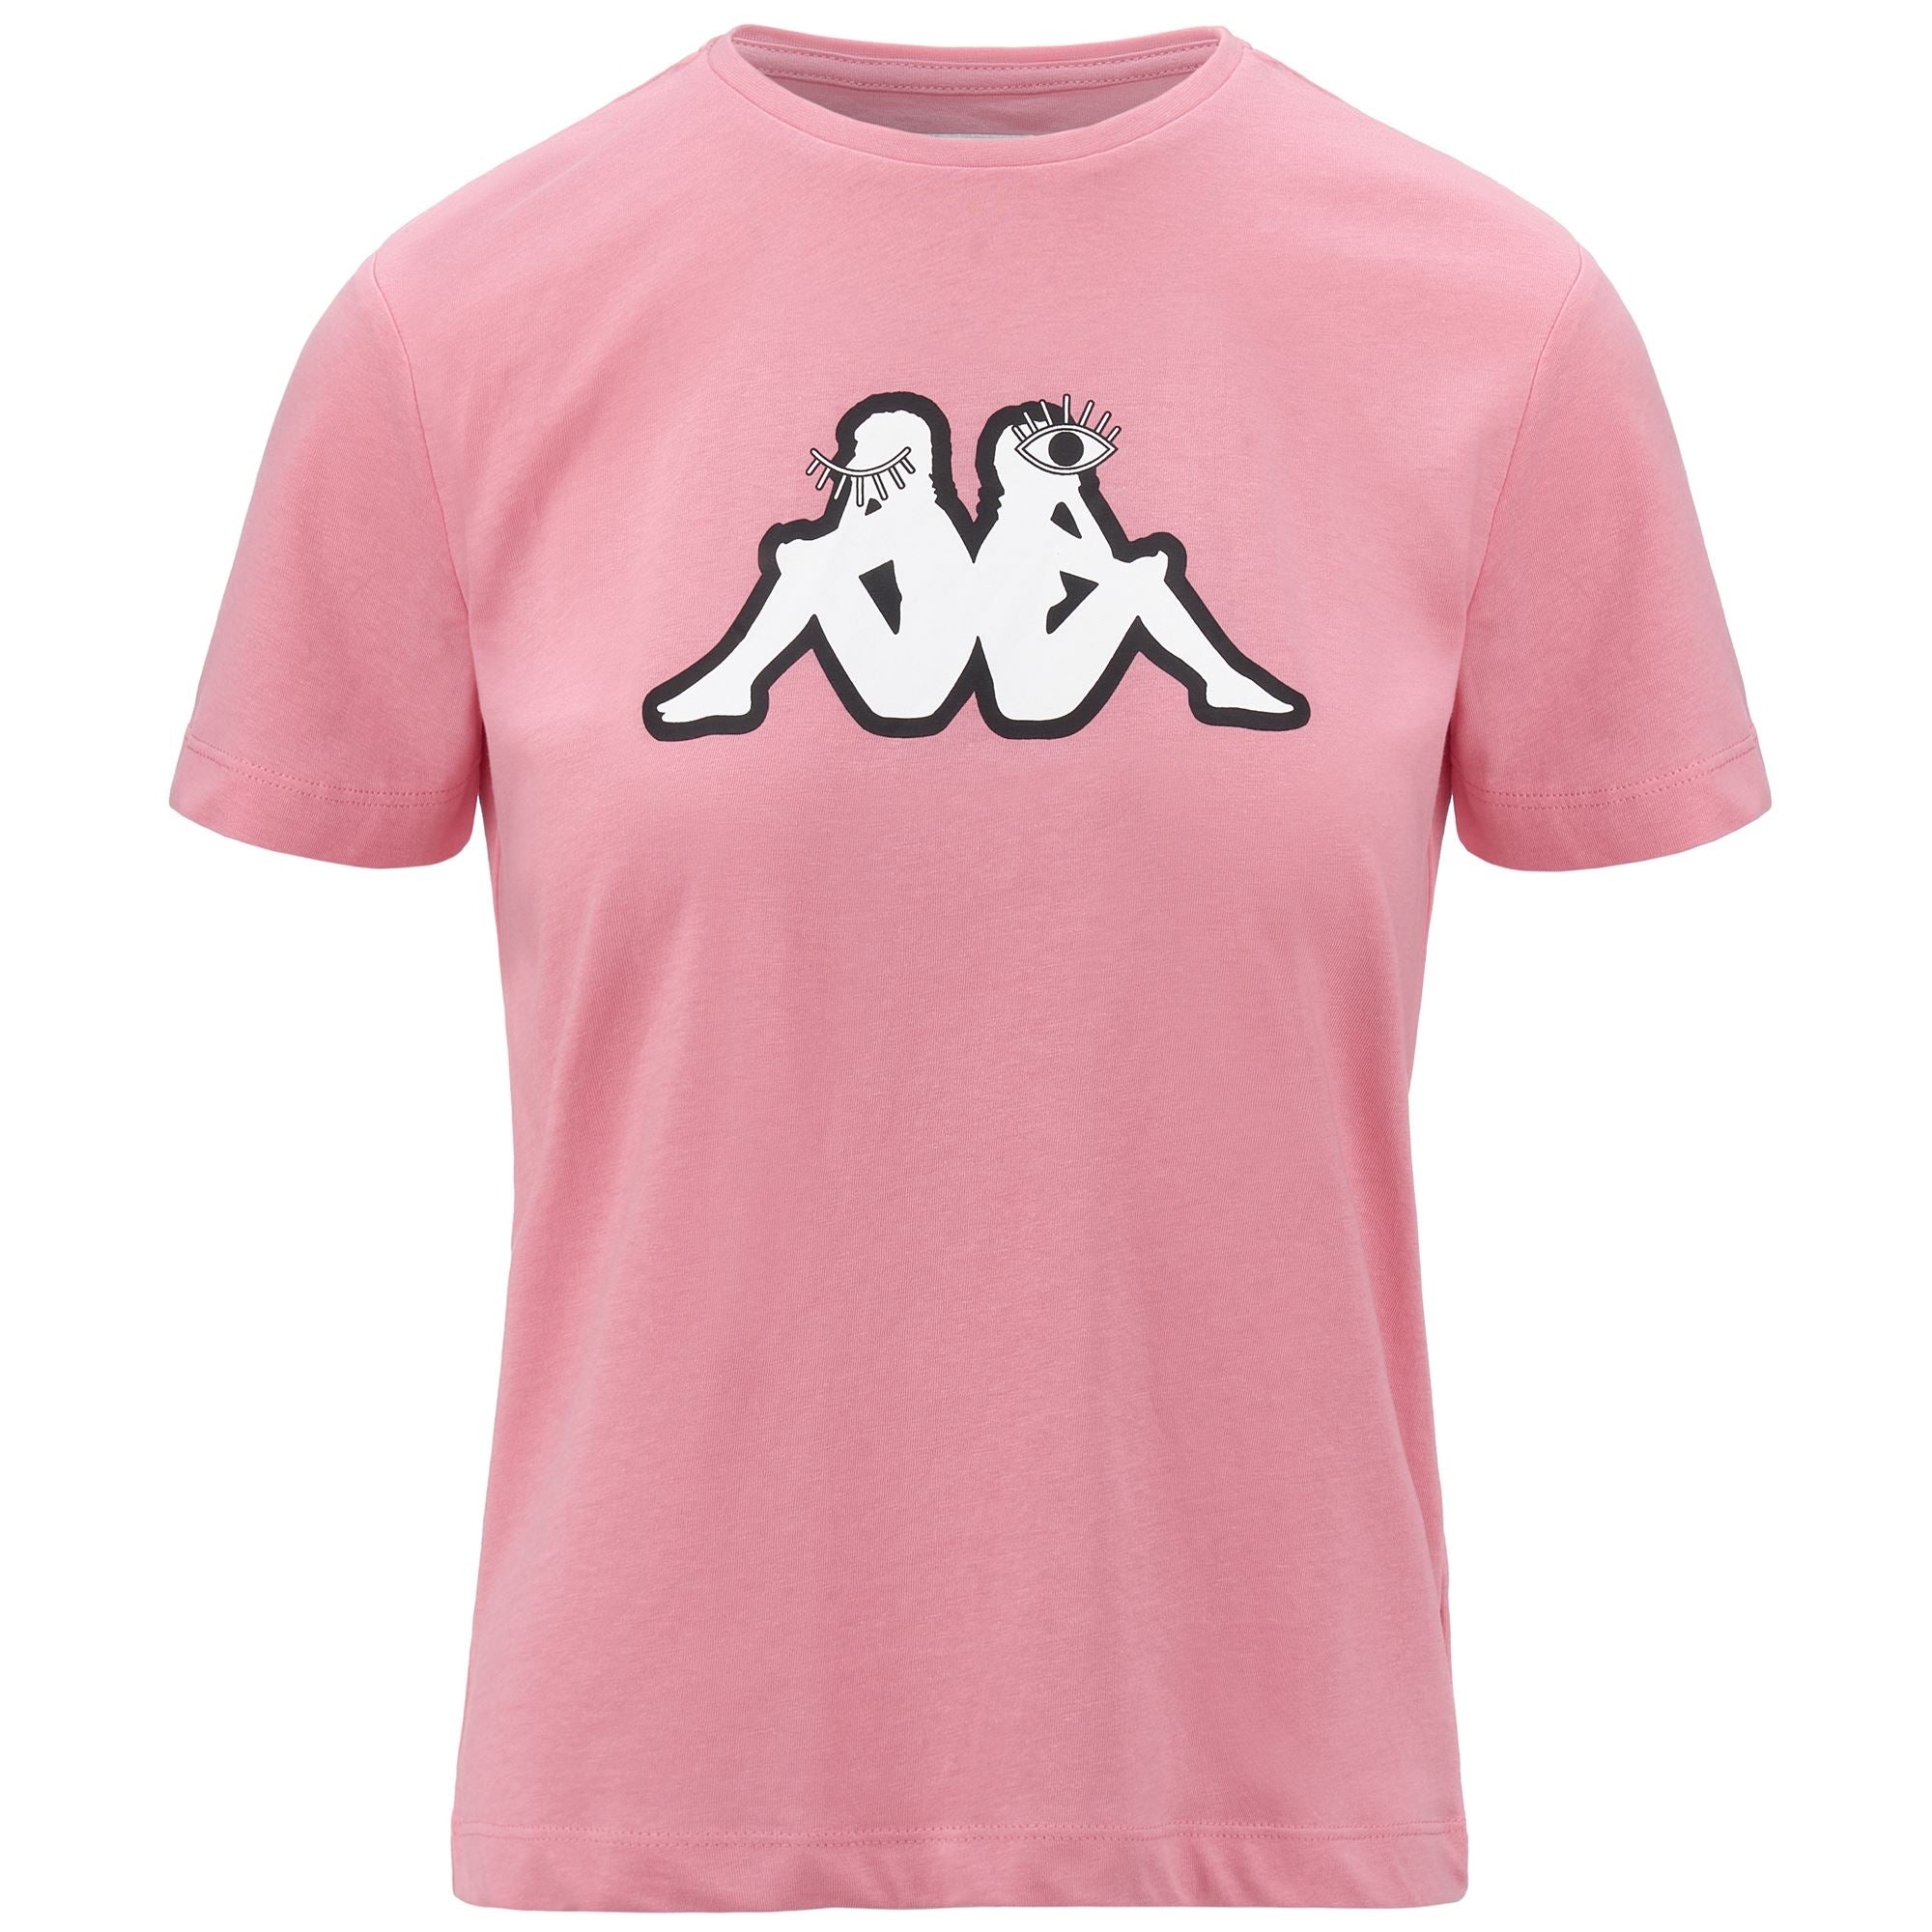 LOGO ERIKA - T-ShirtsTop - T-Shirt - Woman - PINK WARM